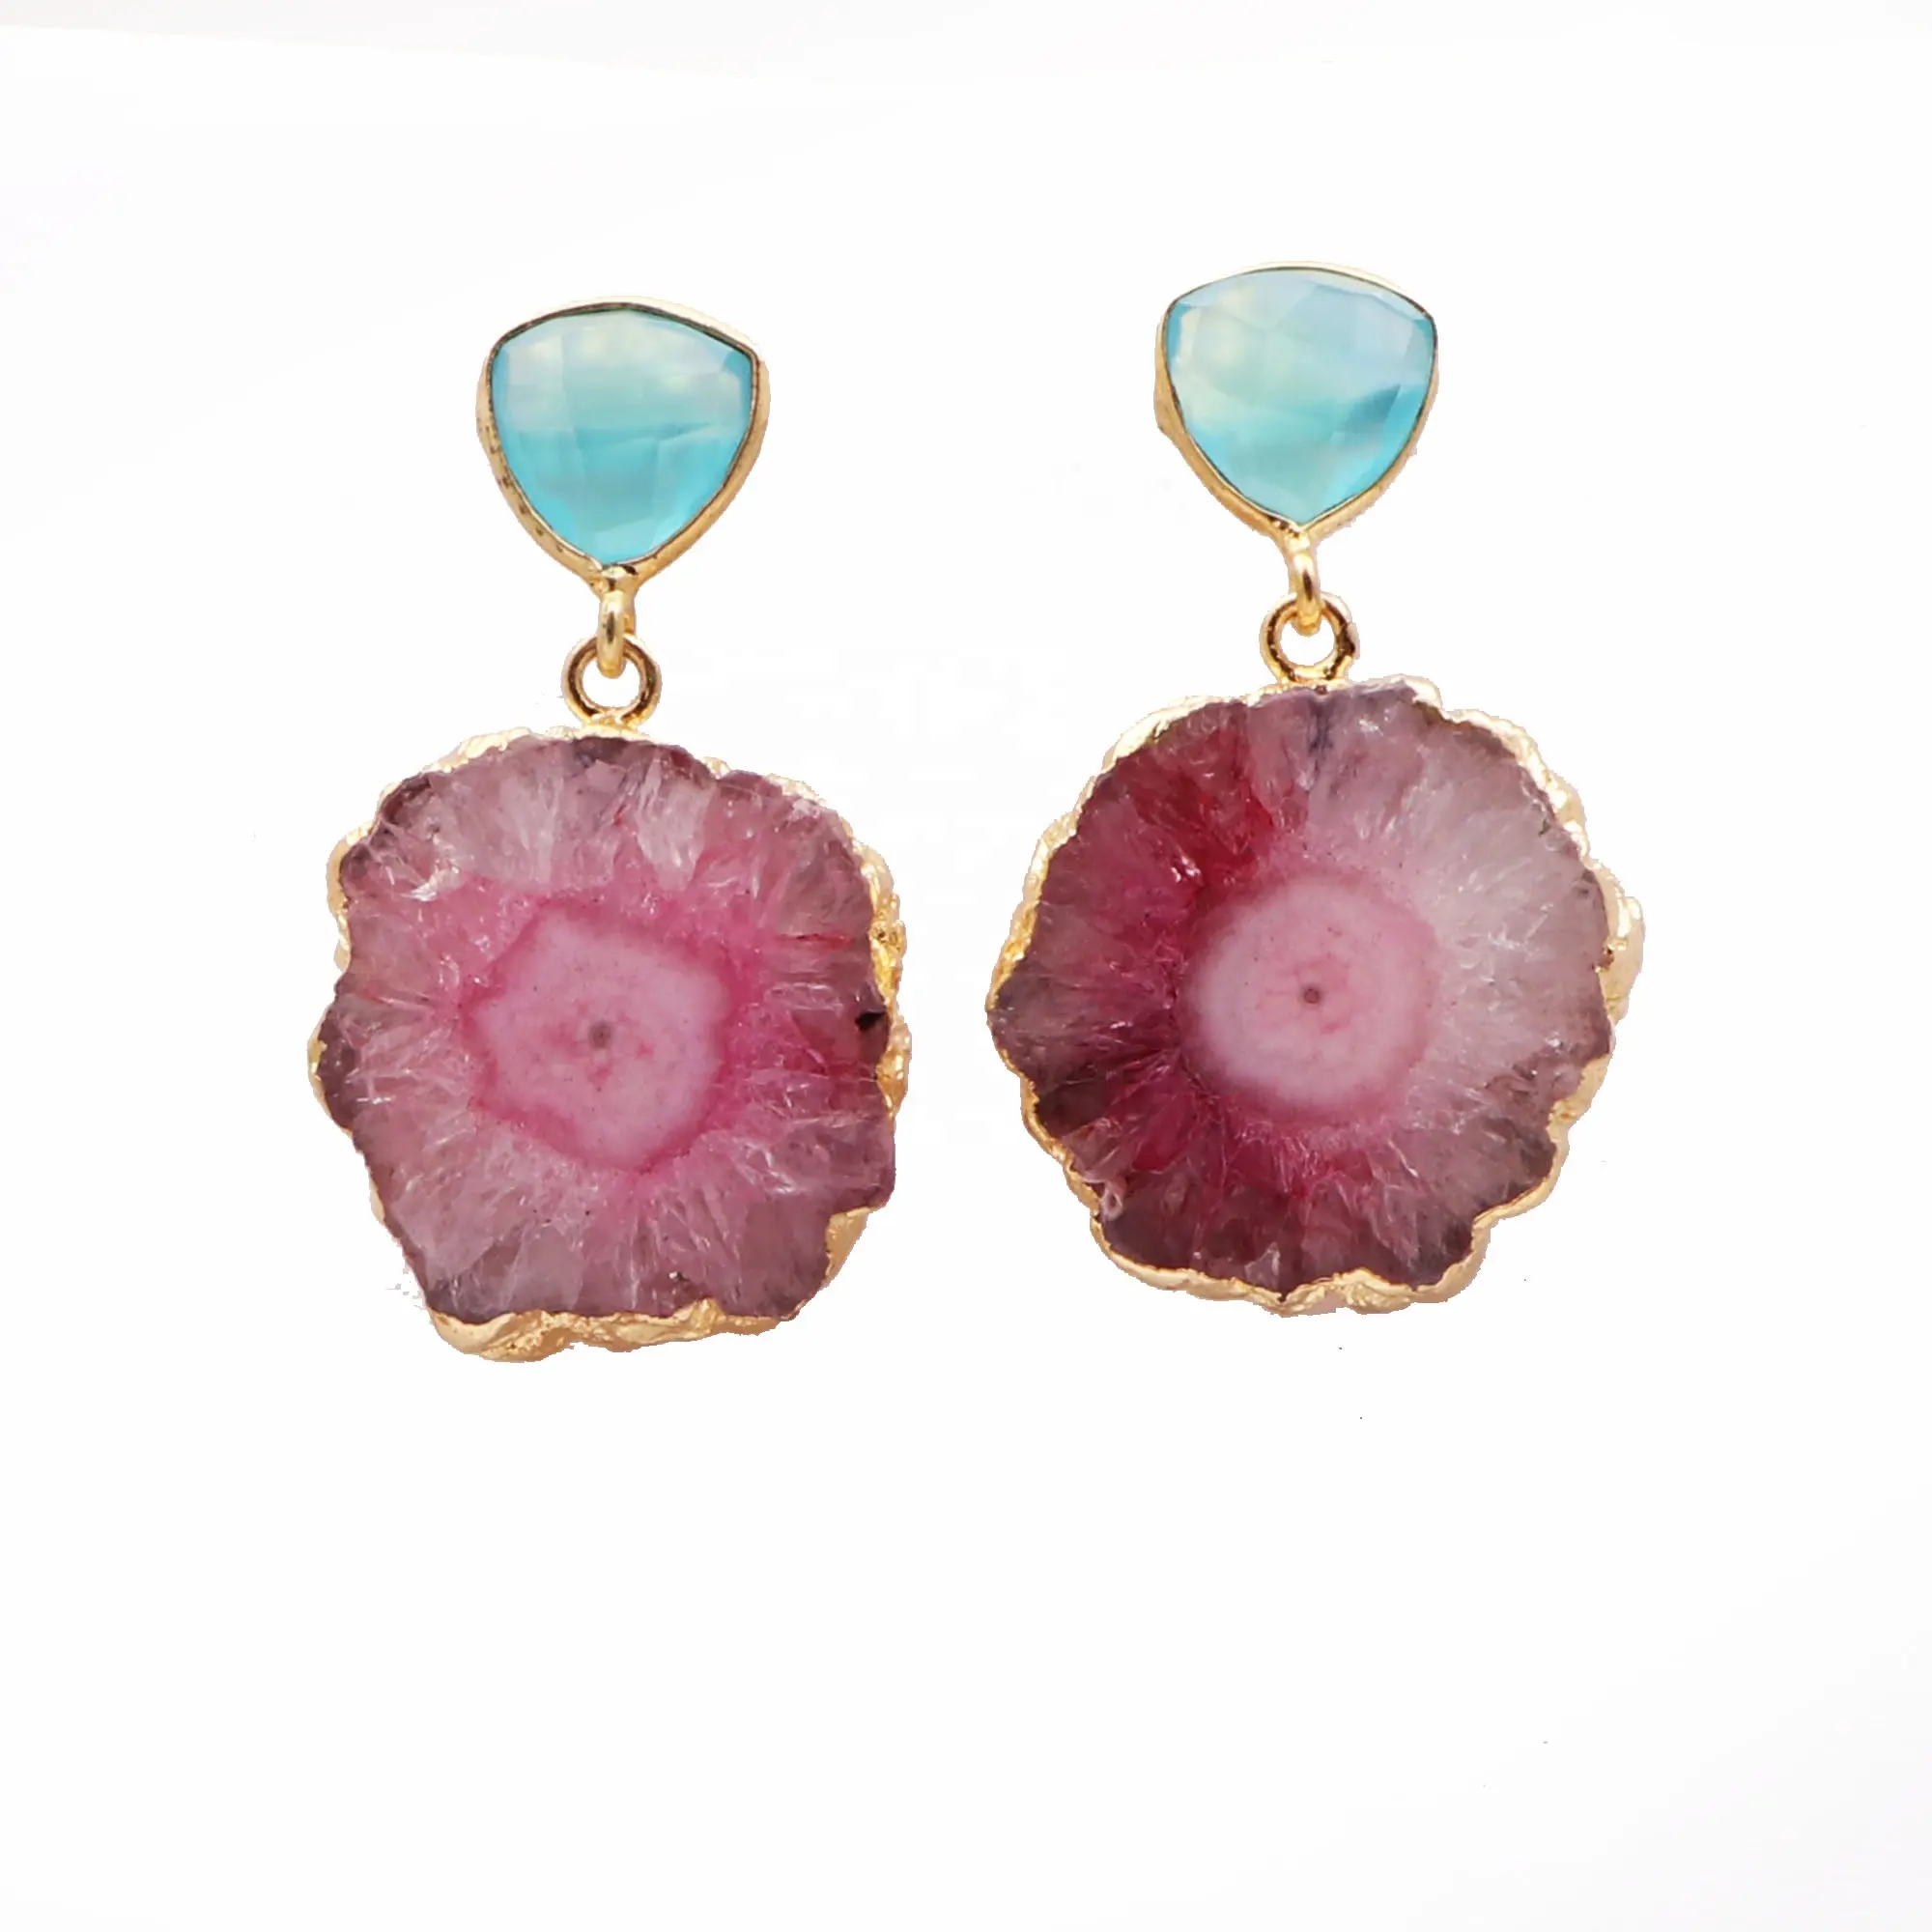 Gold plated earrings jewelry natural blue topaz & solar quartz gemstone handmade jewelry earring double stone earrings